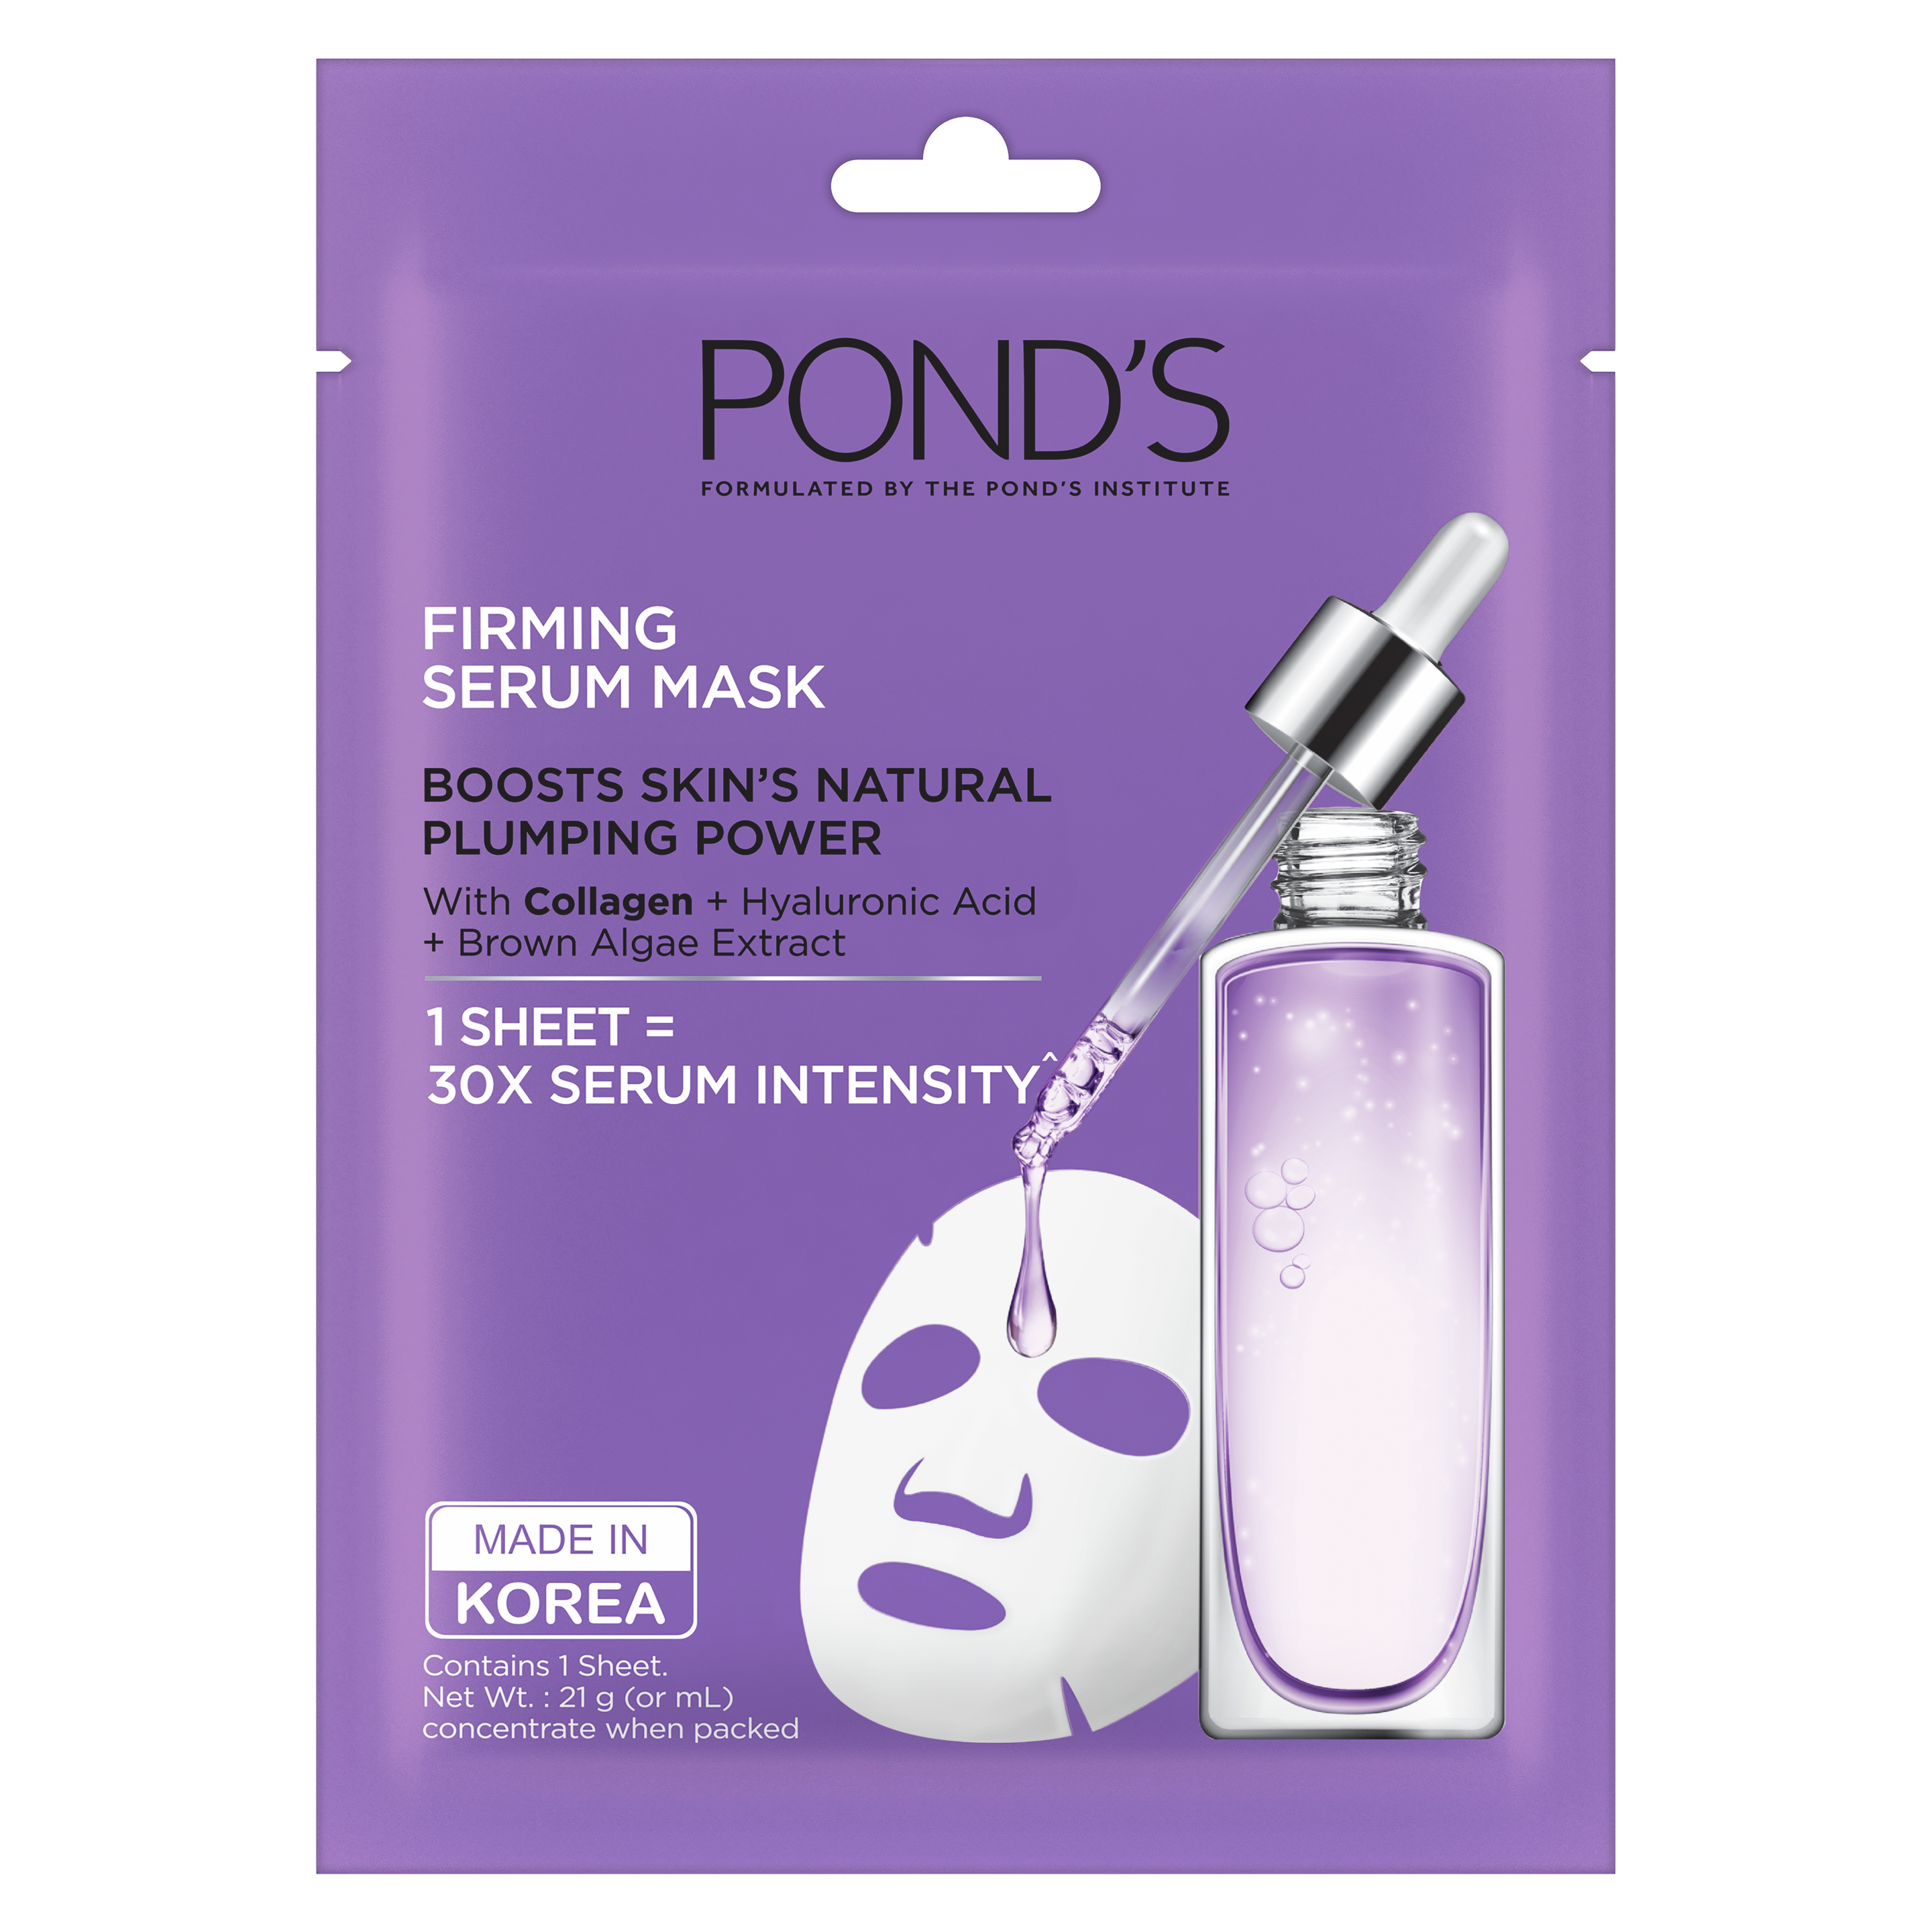 POND'S Firming Serum Mask